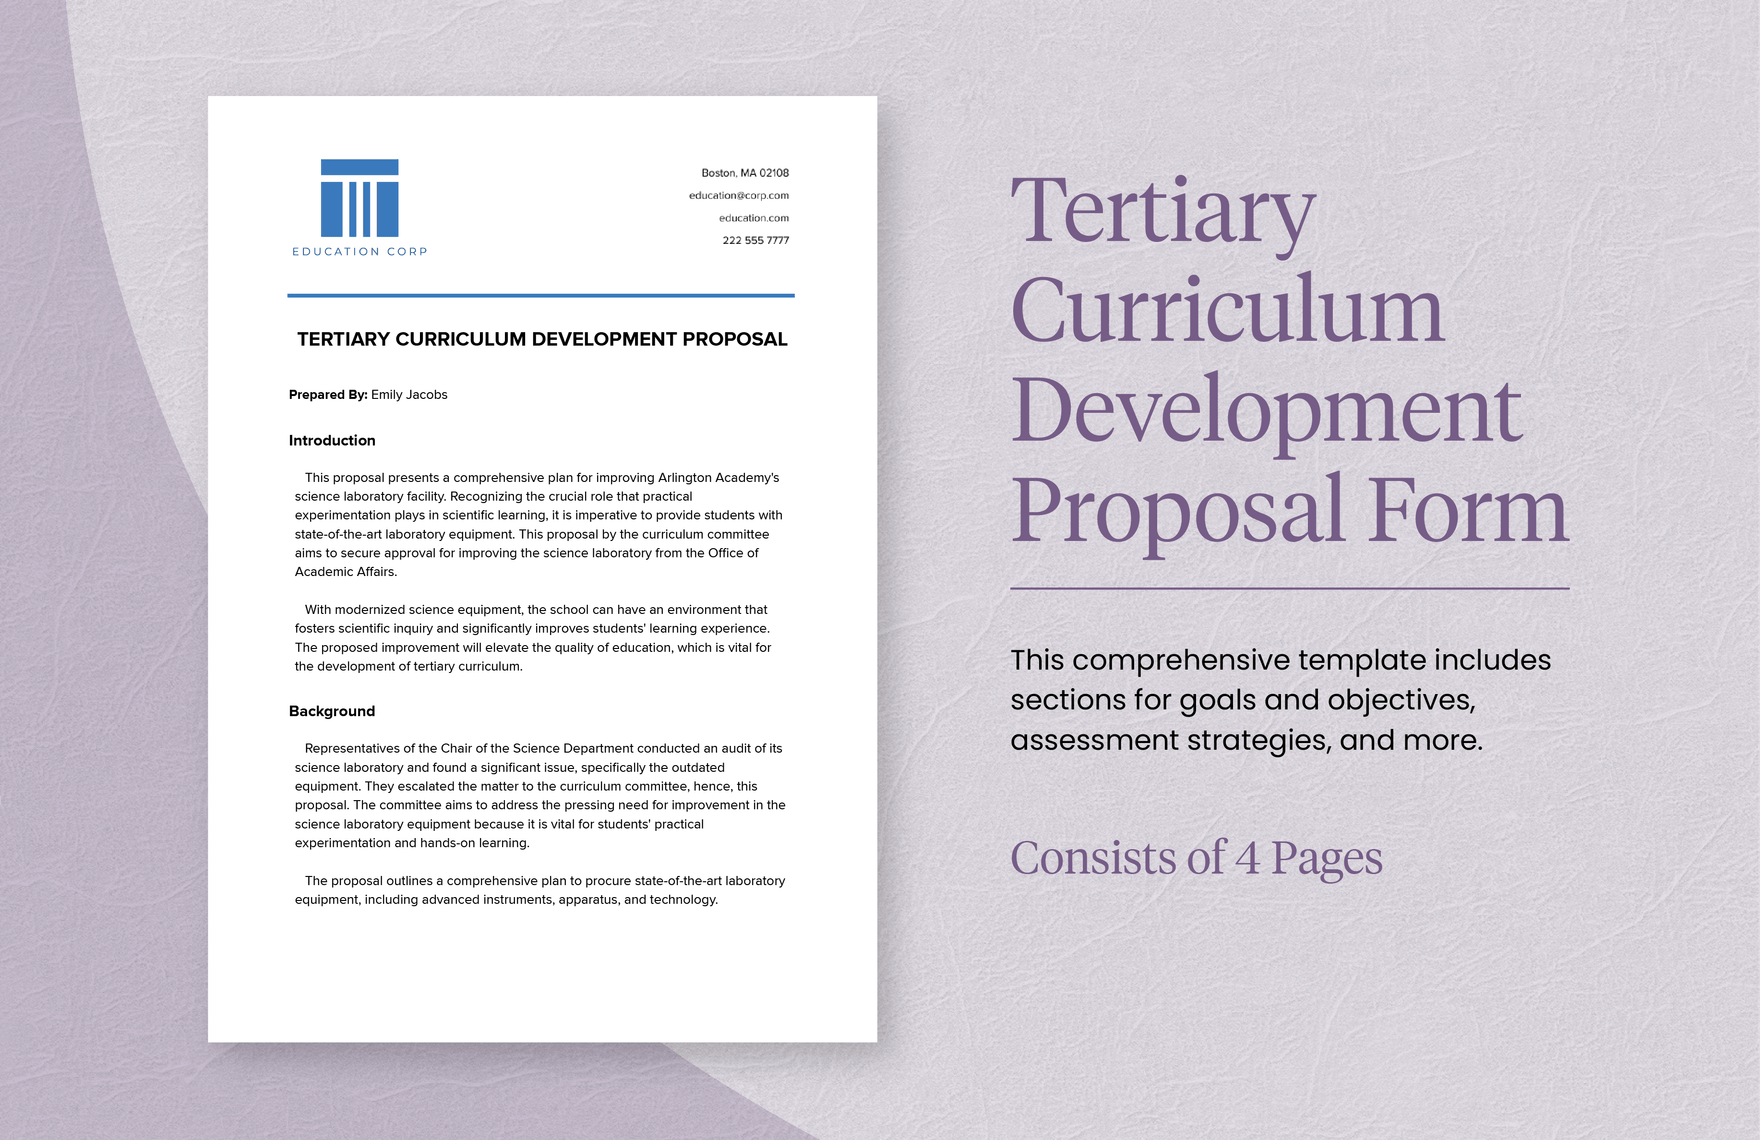 Tertiary Curriculum Development Proposal Form